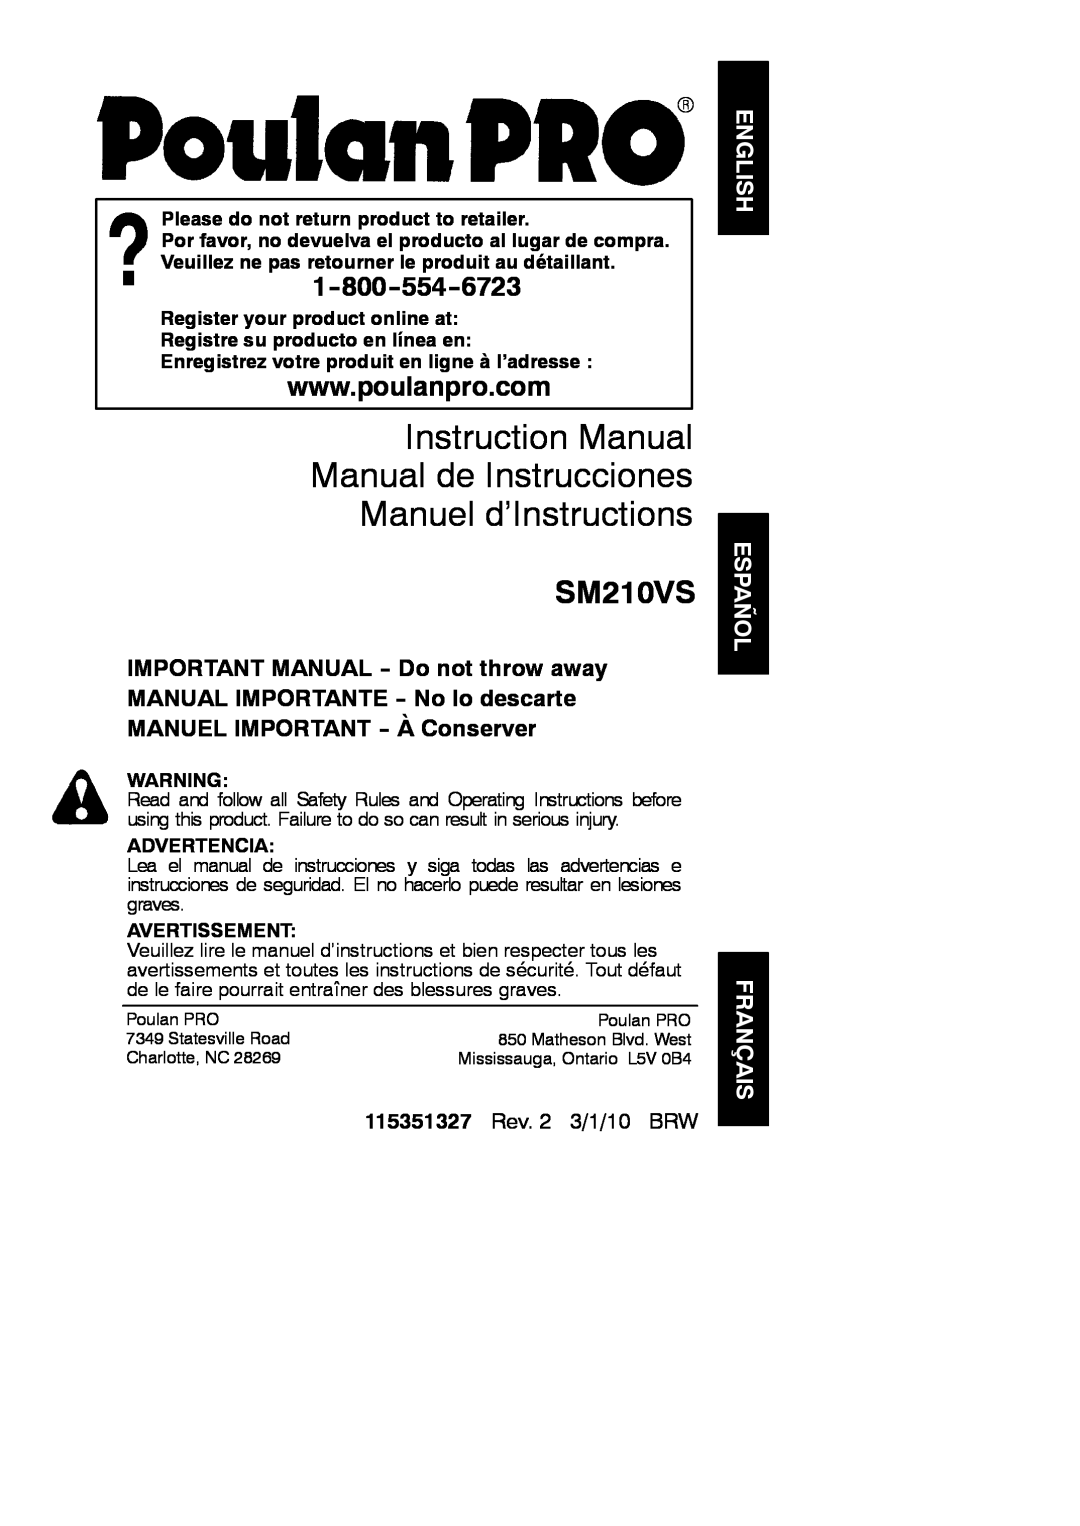 Poulan instruction manual SM210VS, English Español Français, 115351327 Rev. 2 3/1/10 BRW, Advertencia, Avertissement 